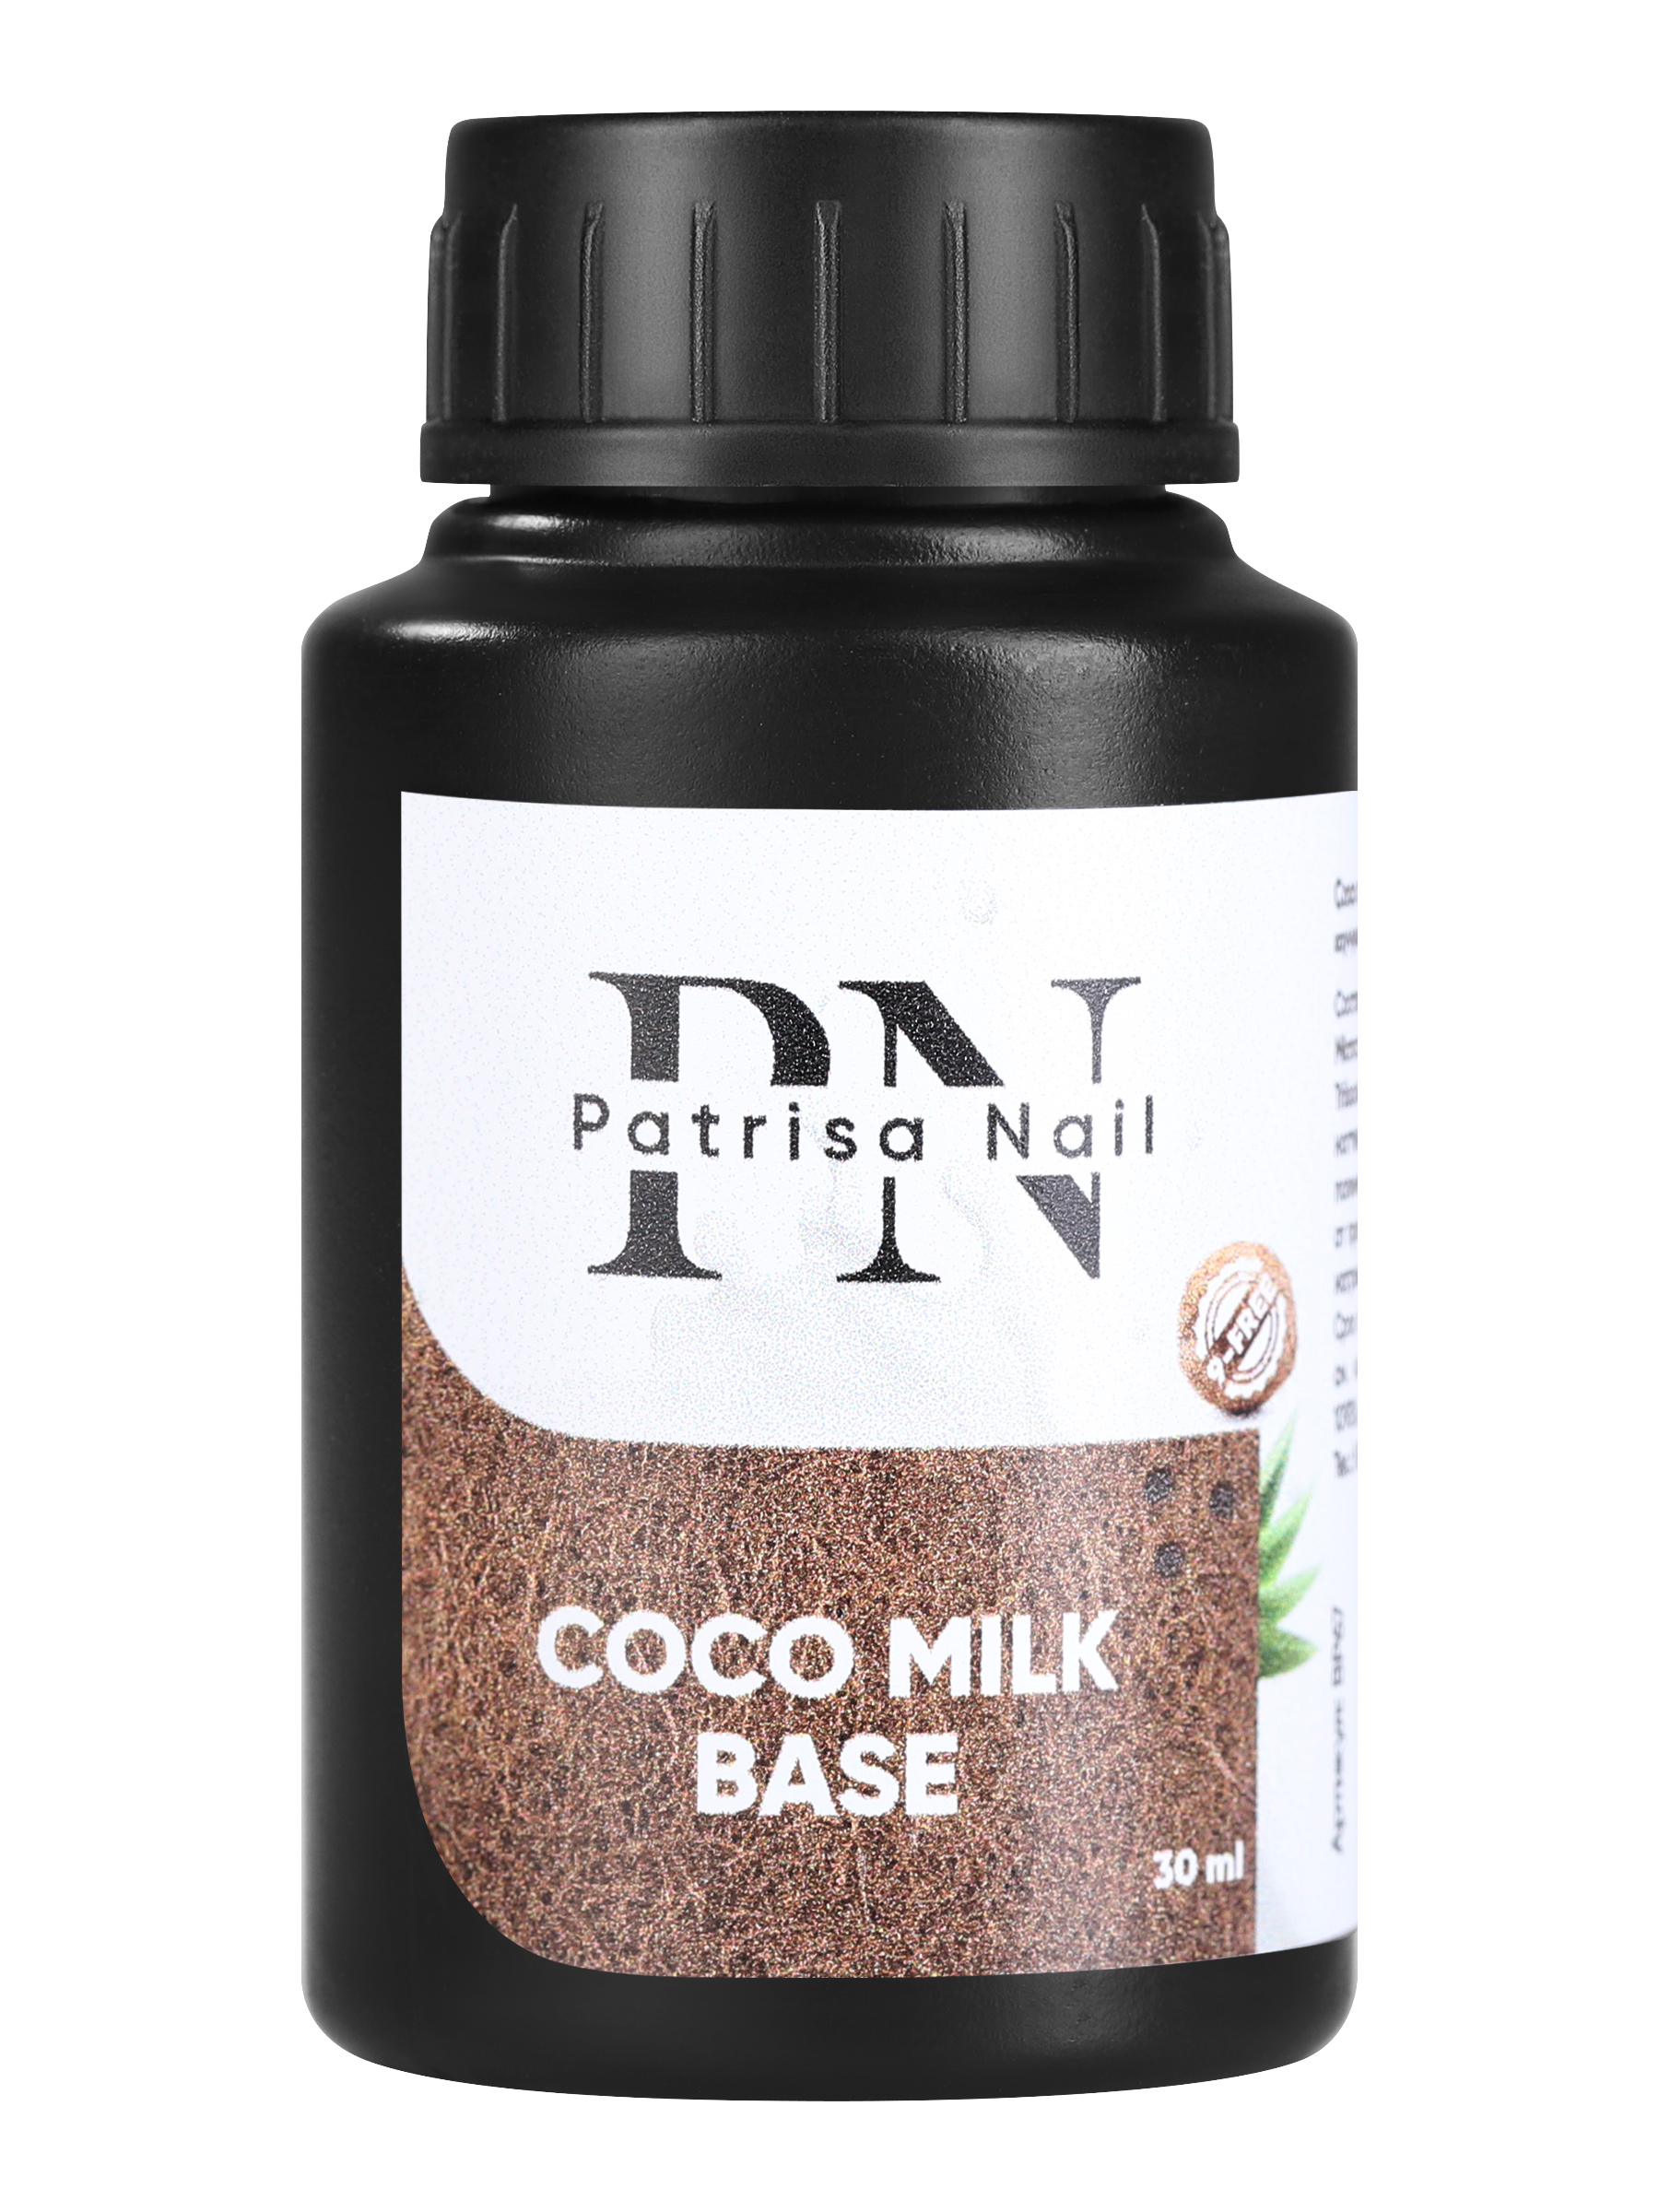 База для гель-лака Patrisa Nail Coco milk base камуфлирующая каучуковая молочная, 30 мл patrisa nail молочная база с микрошиммером beze base